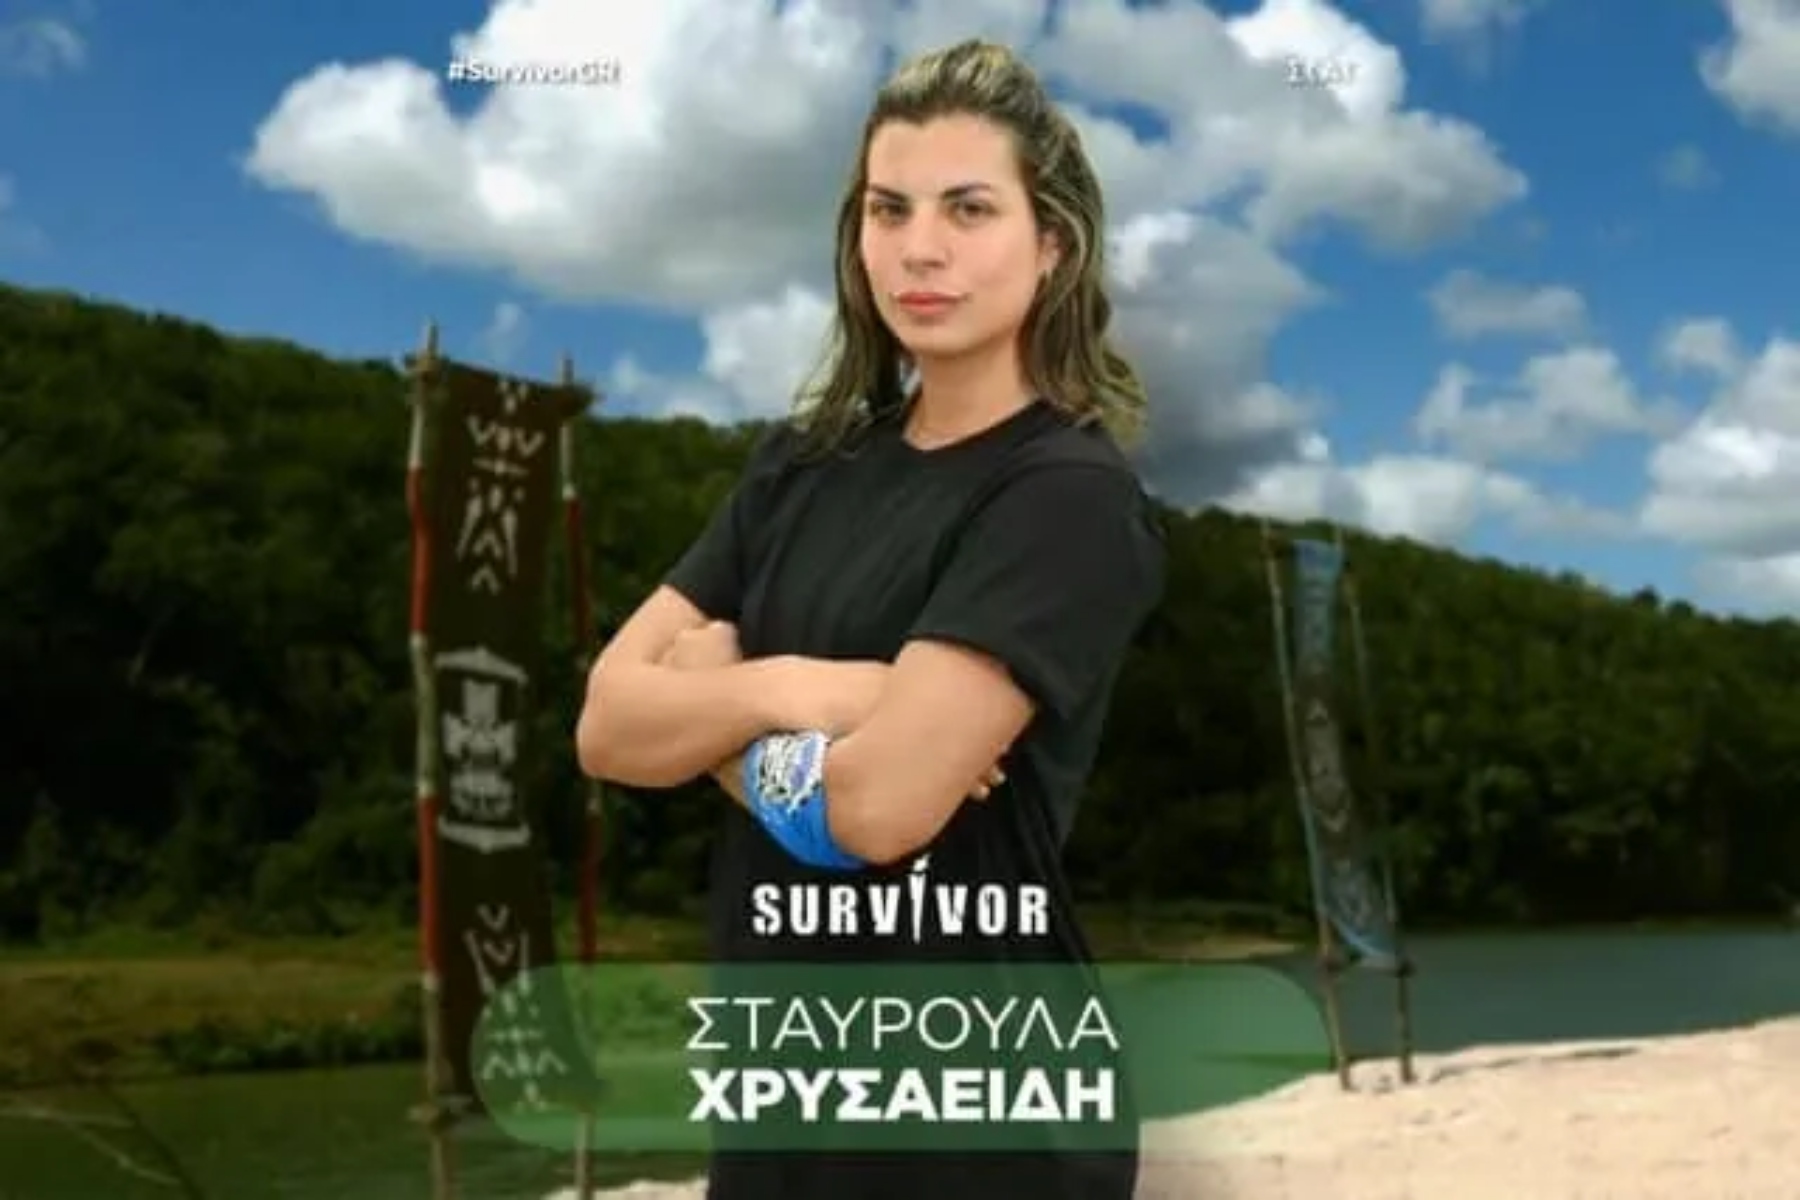 Survivor 06/05: Η Σταυρούλα πρώτη υποψήφια προς αποχώρηση [vid]